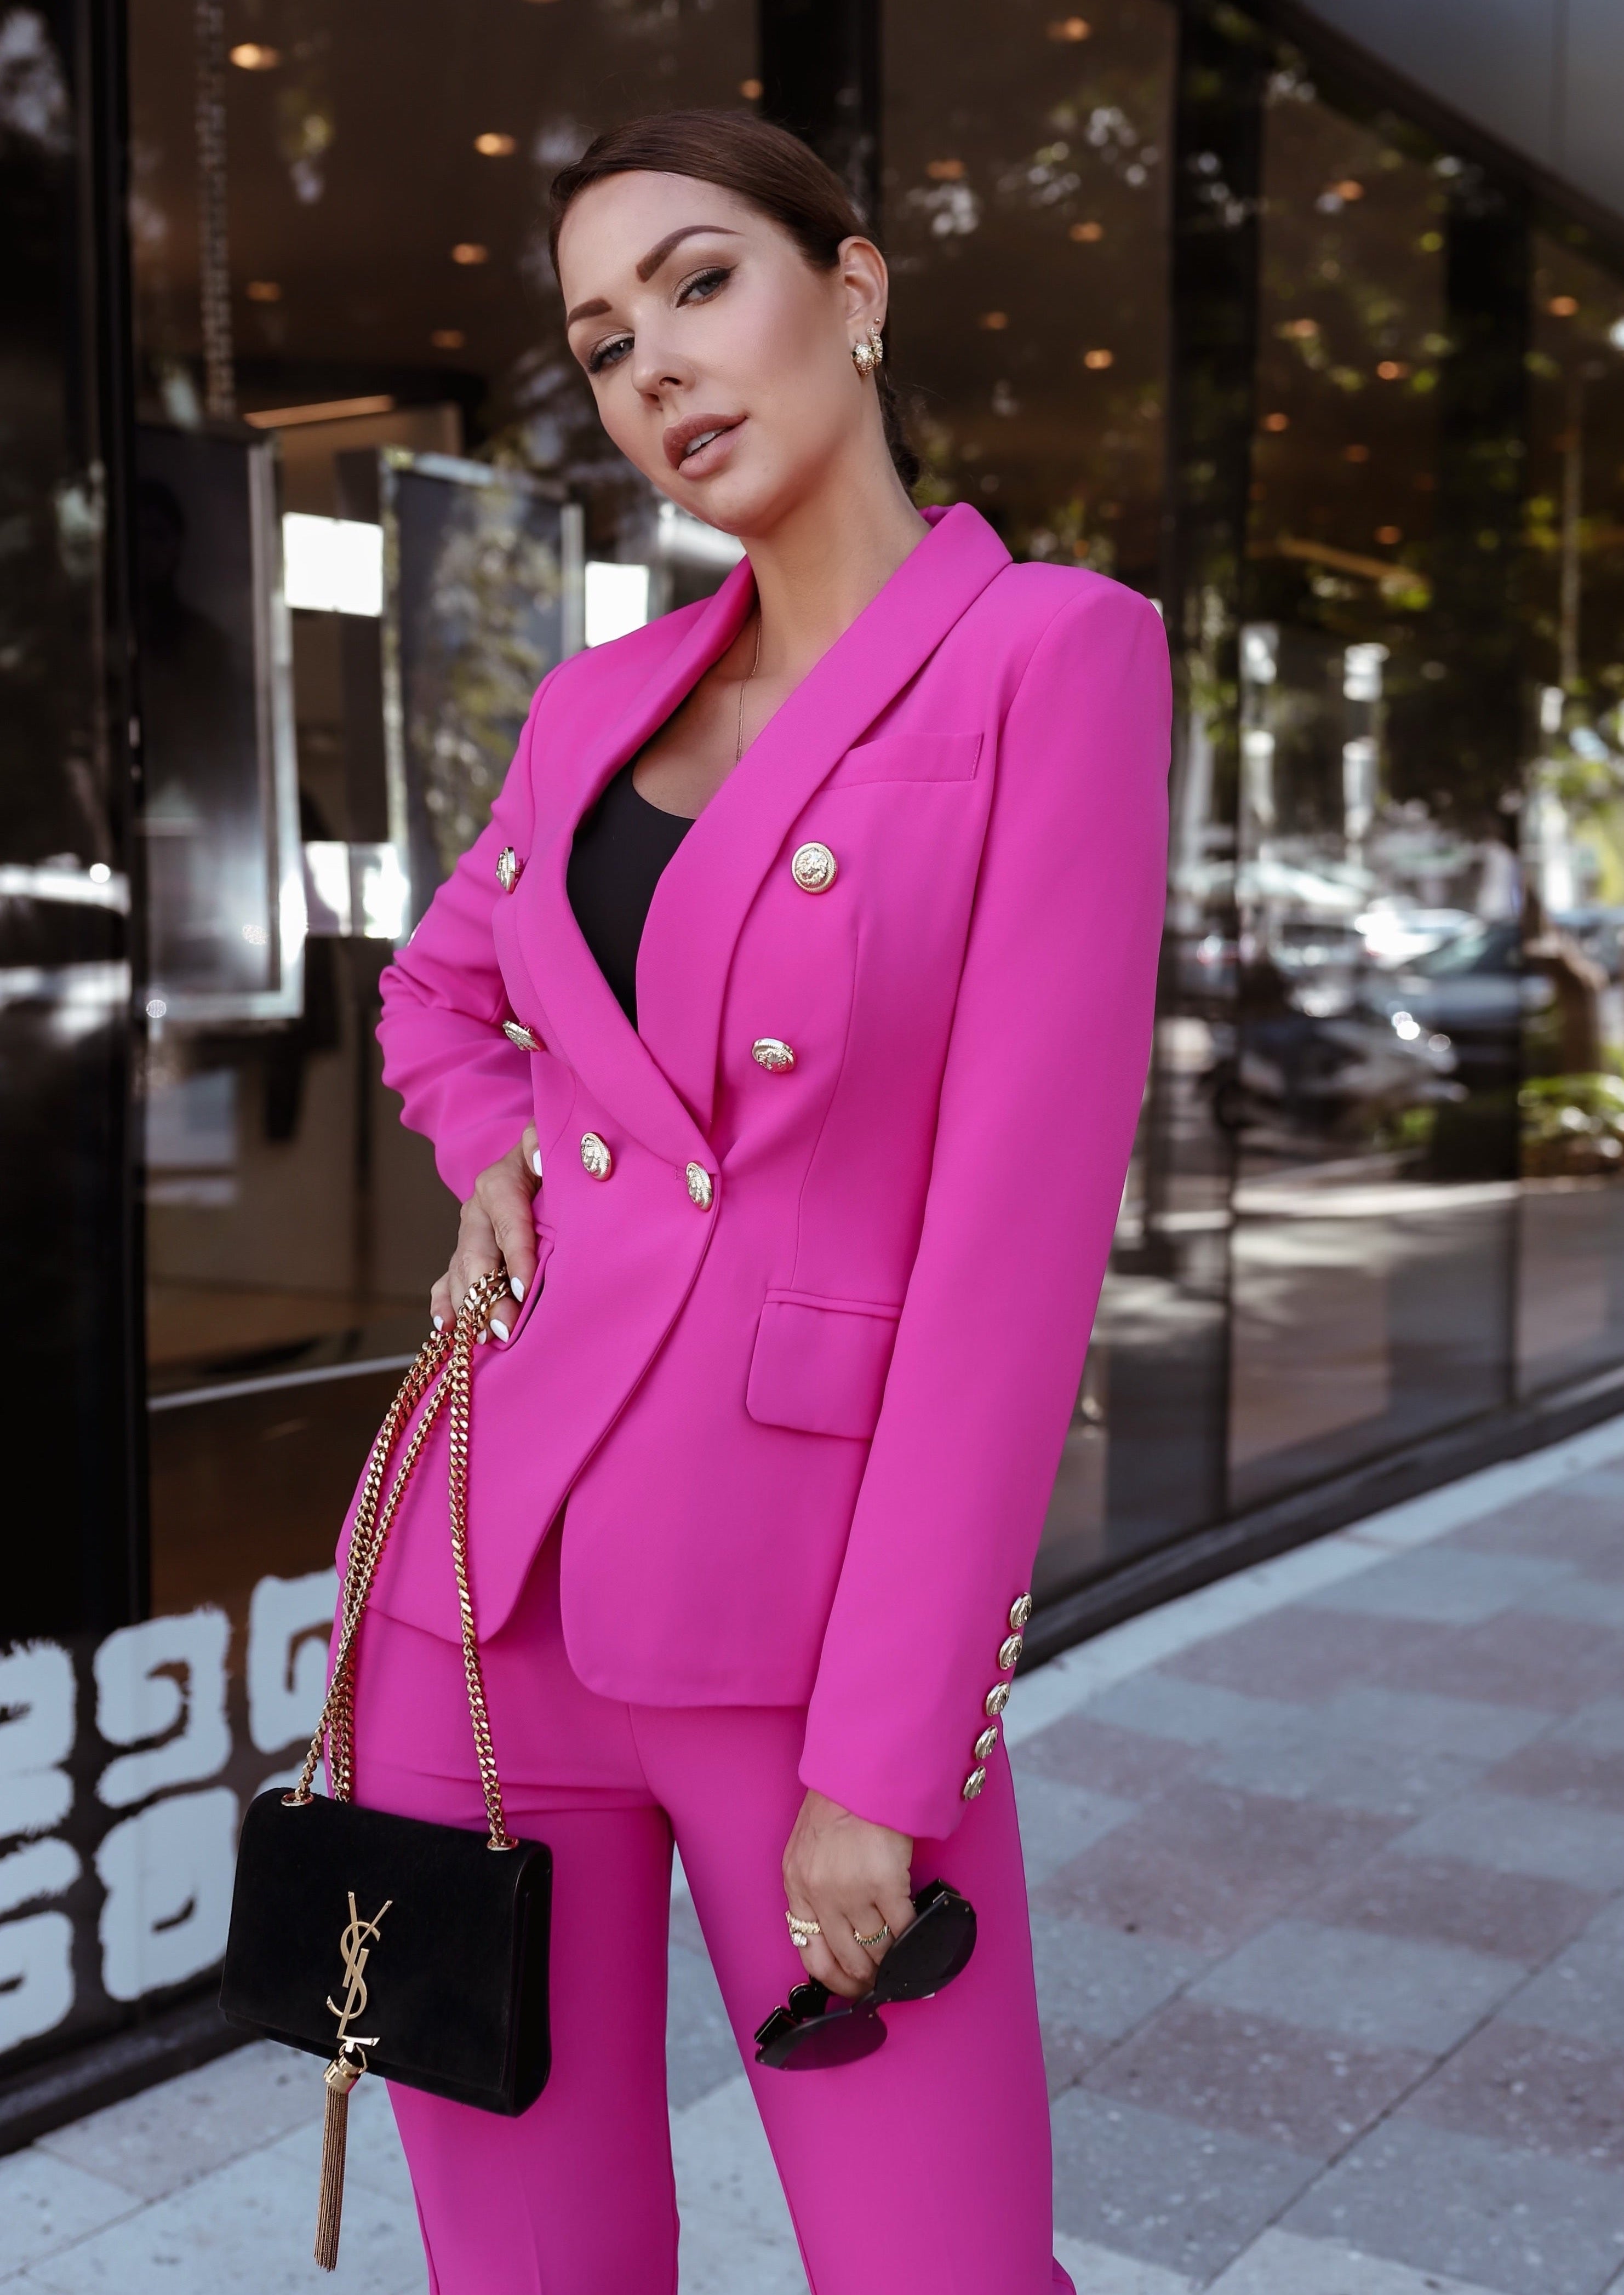 Hot Pink Blazer - Double Breasted Blazer - Pant Suit - Pantsuit - Lulus